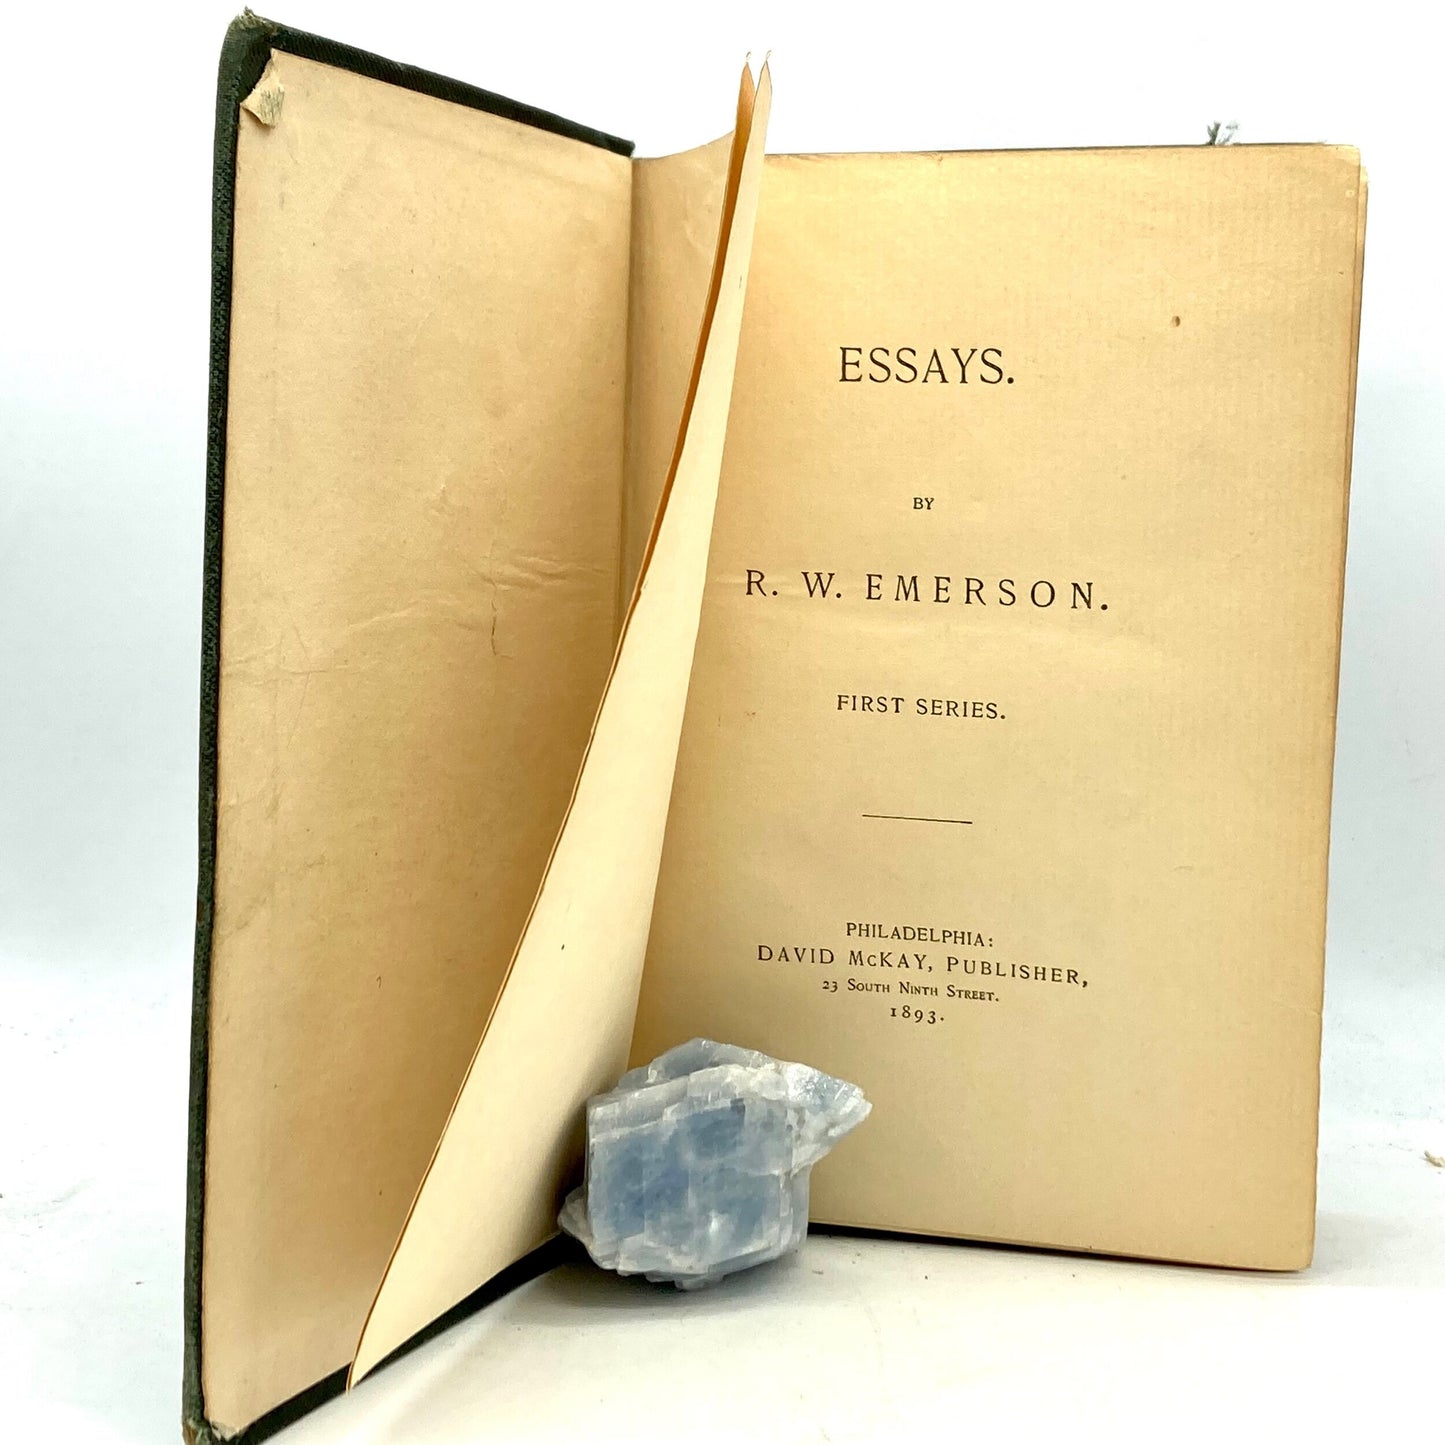 EMERSON, Ralph Waldo "Essays" [David McKay, 1893] - 2 Volumes - Buzz Bookstore